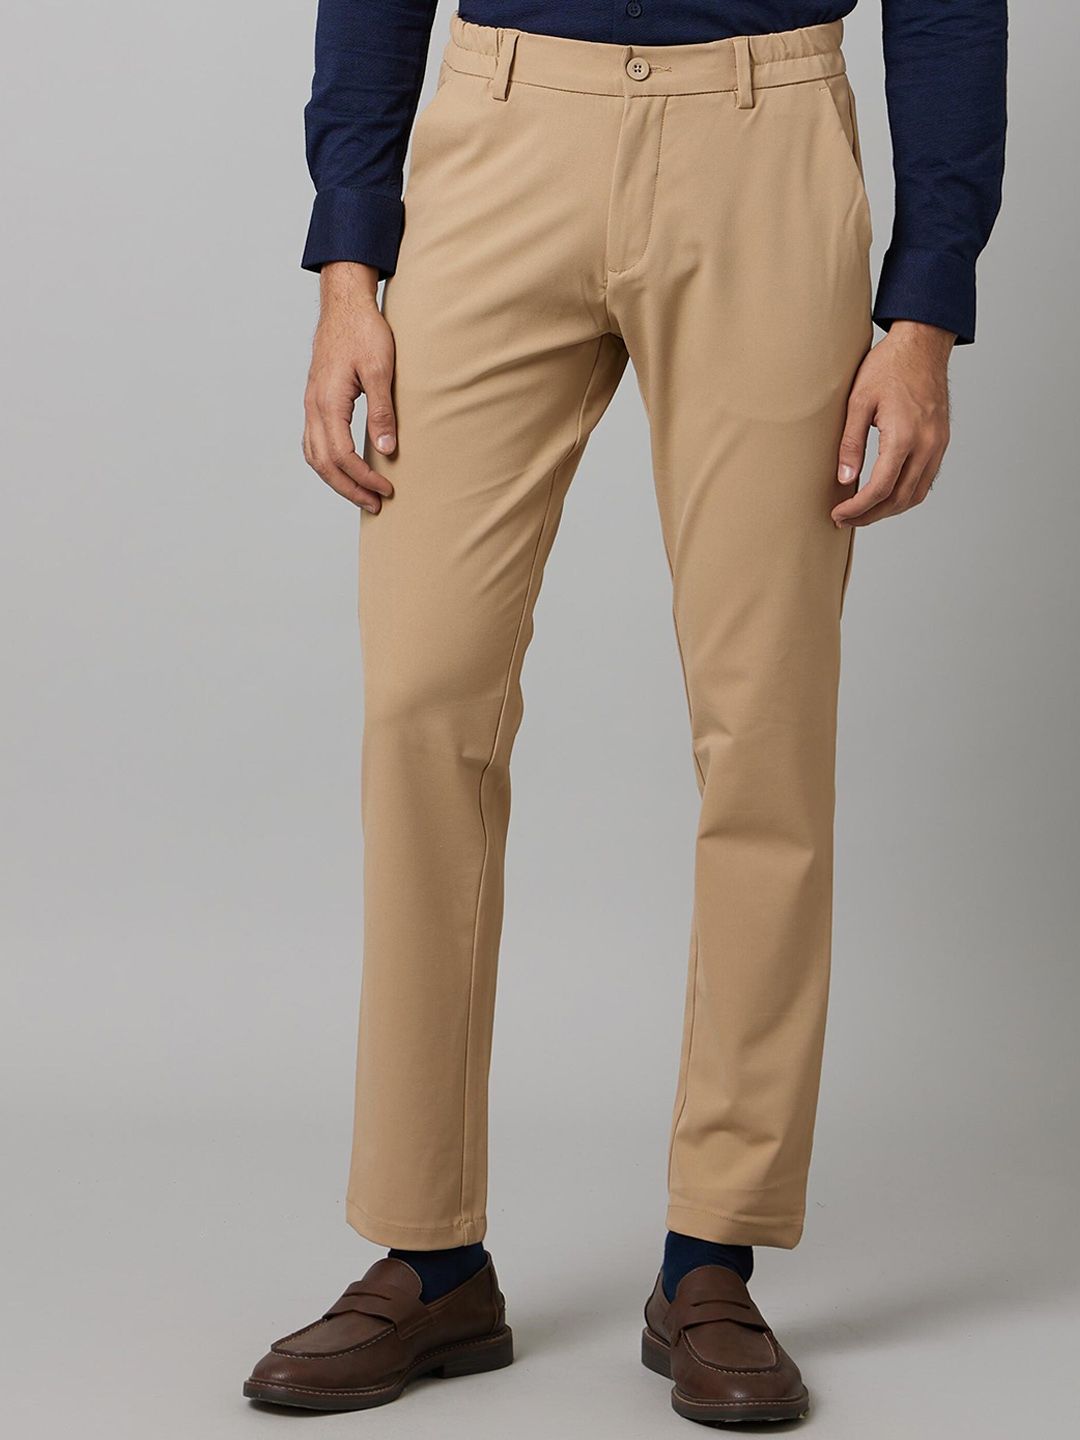 Buy Celio Trousers online  Men  312 products  FASHIOLAin